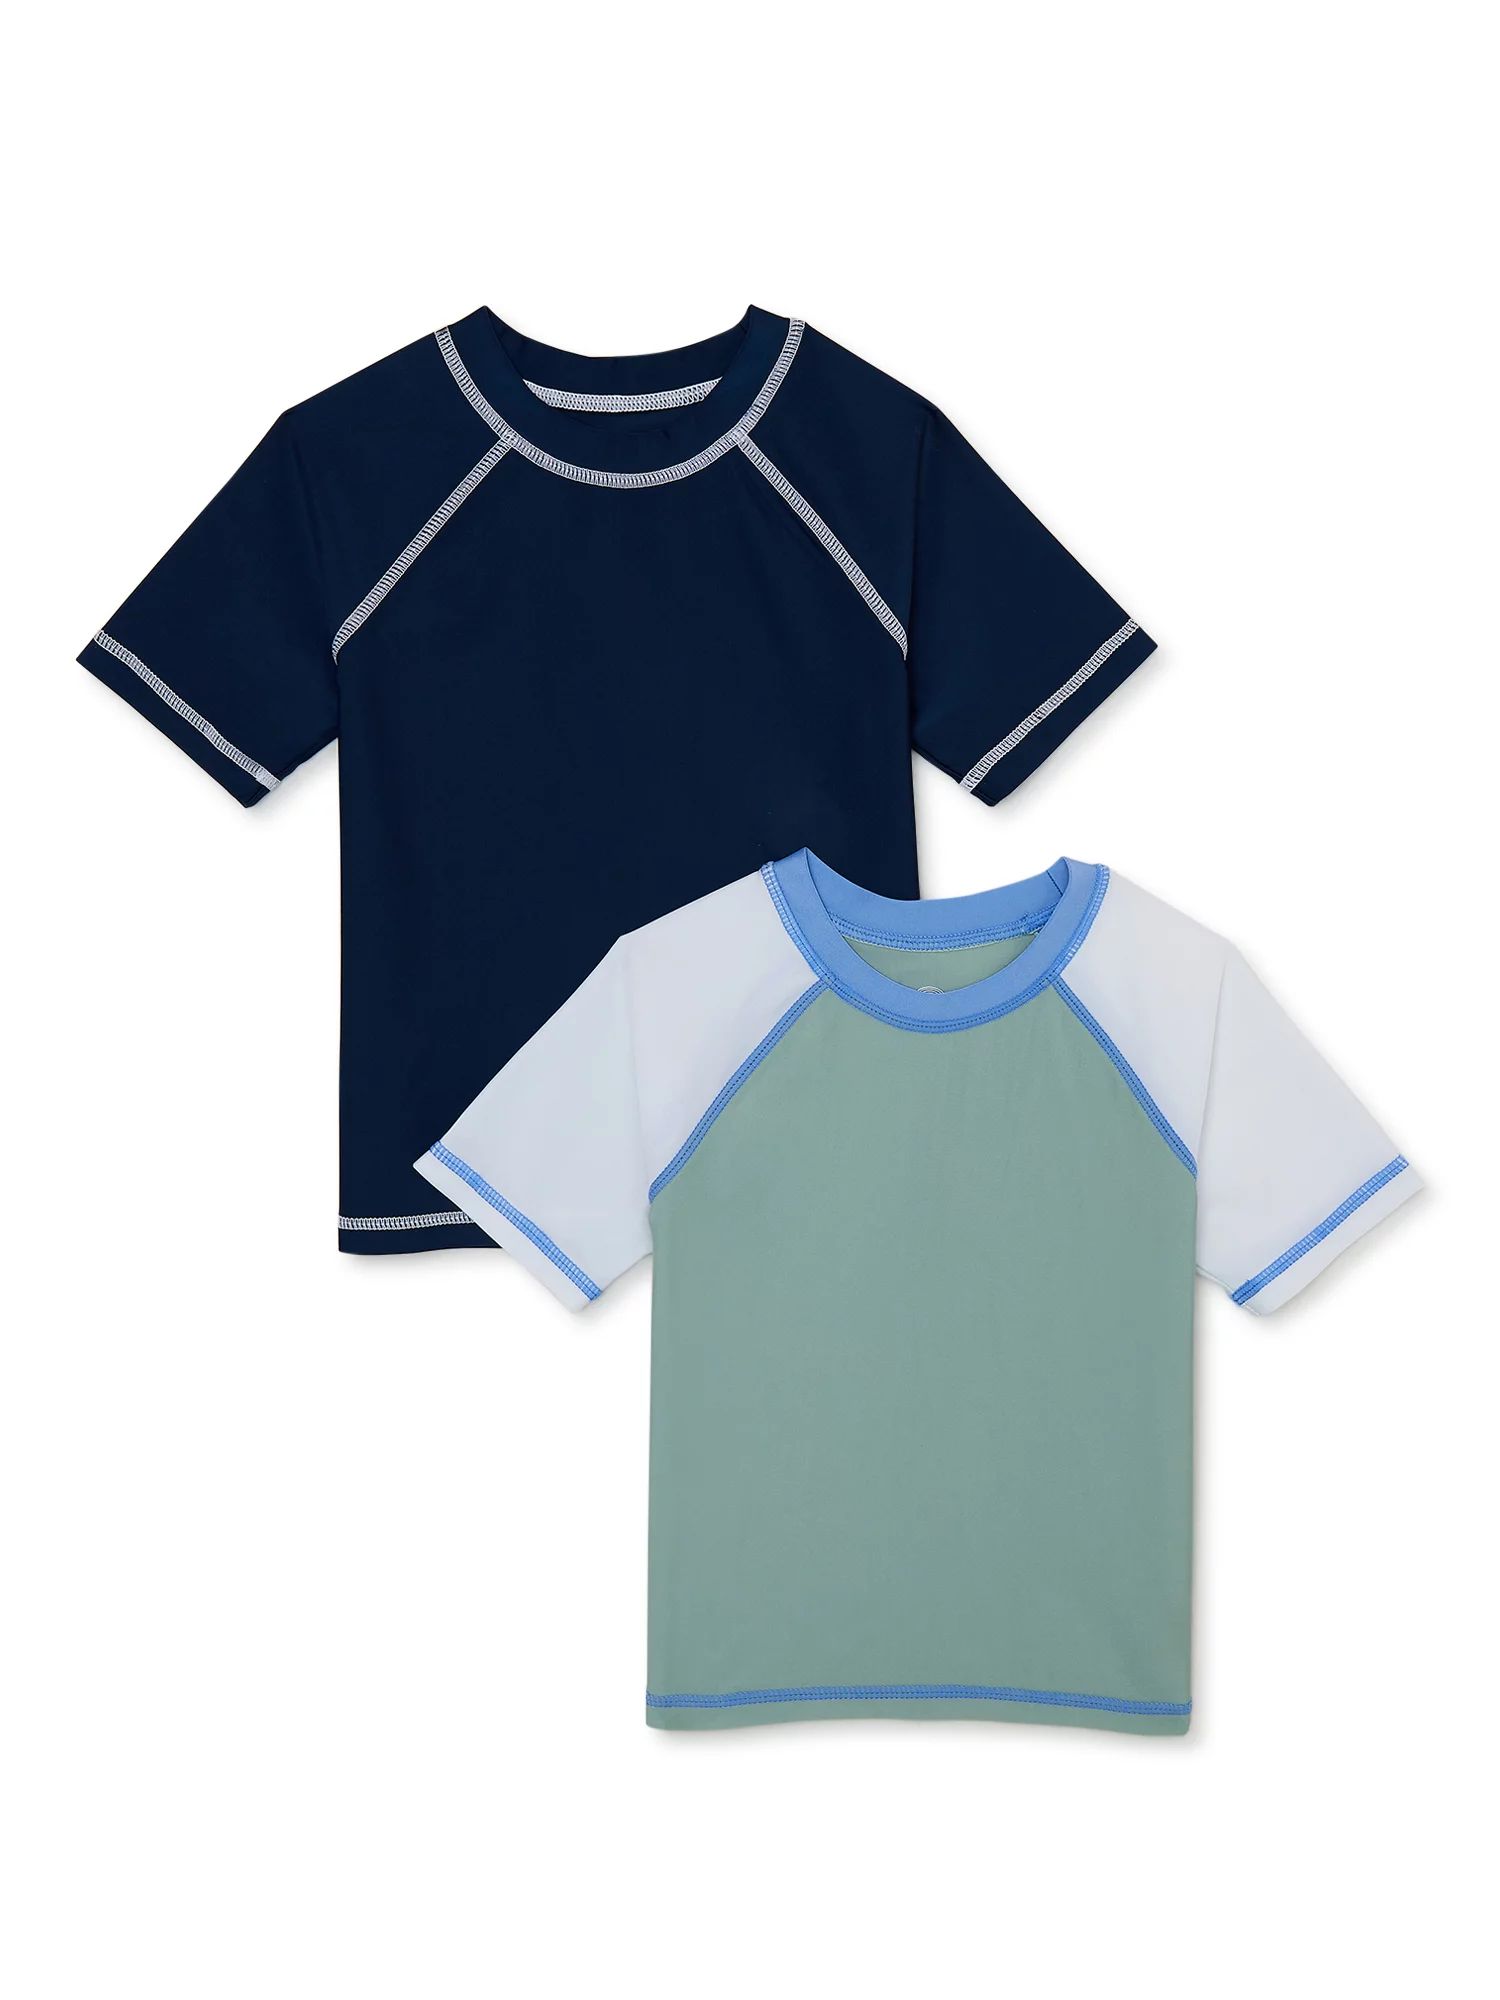 Wonder Nation Baby and Toddler Unisex Short Sleeve Rash Guard Tops, 2-Pack, Size 12M-5T | Walmart (US)